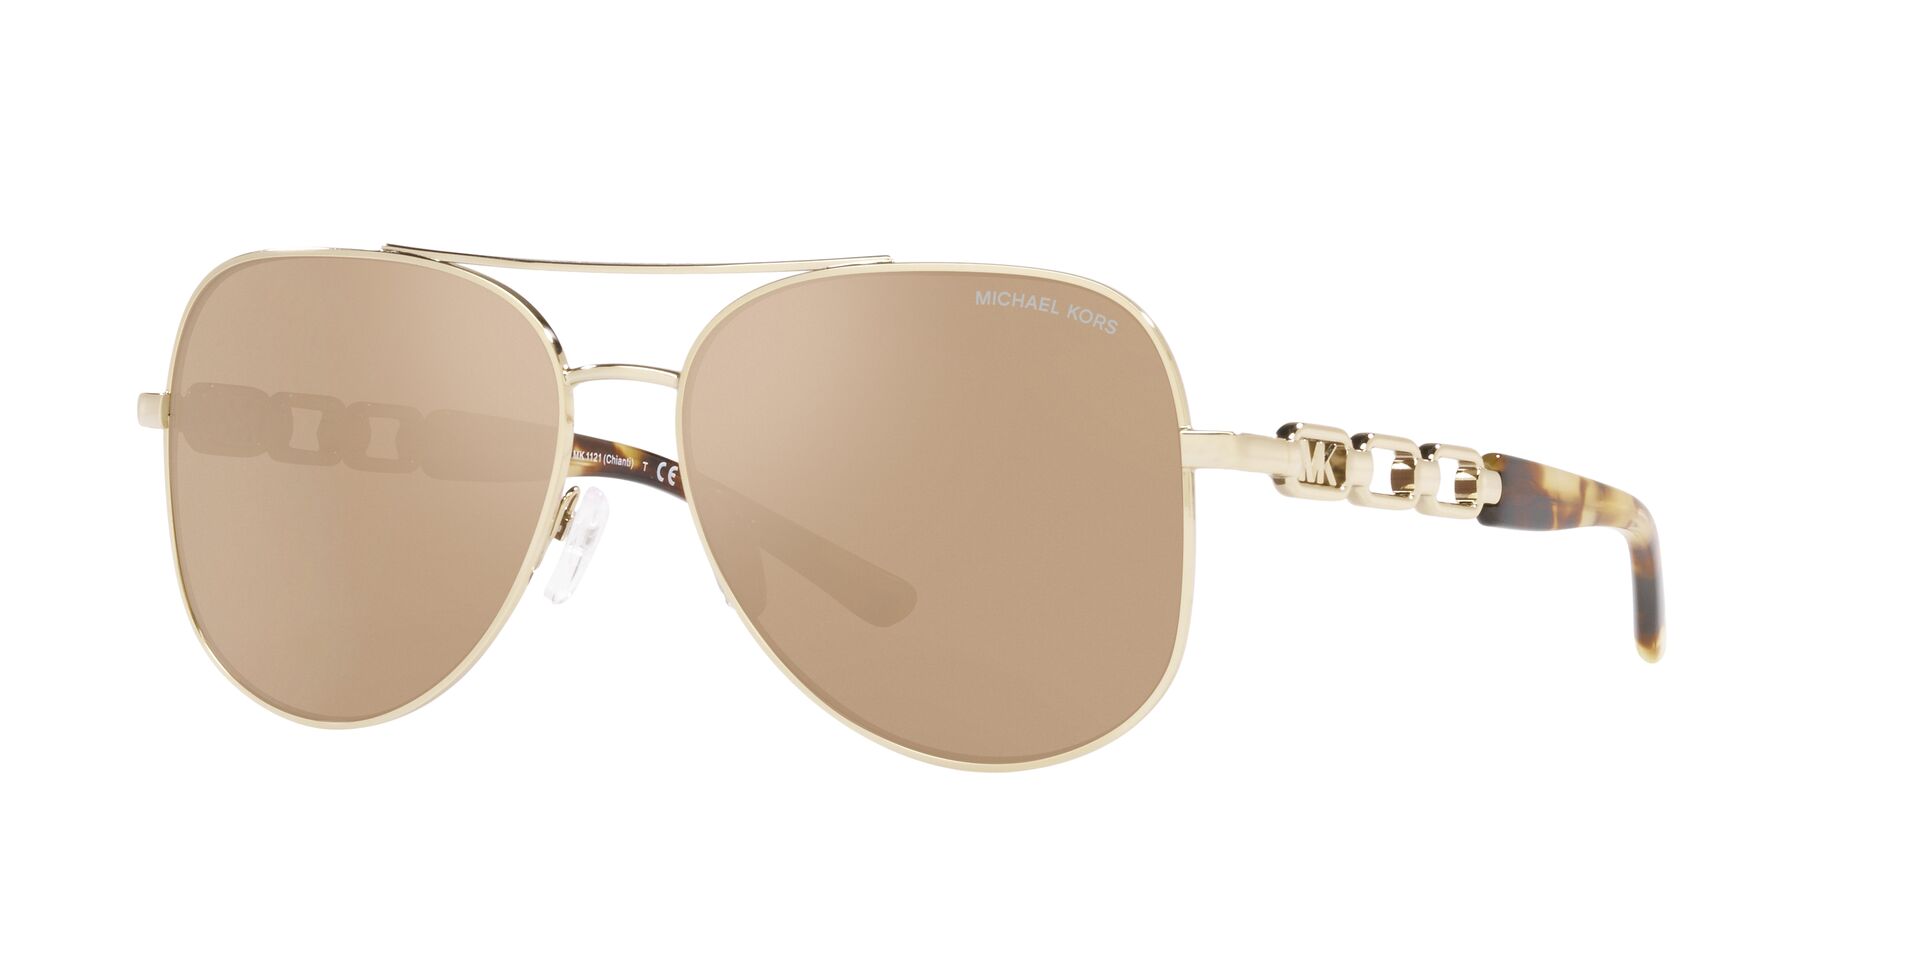 Michael Kors Chianti MK1121 Aviator Sunglasses | Fashion Eyewear